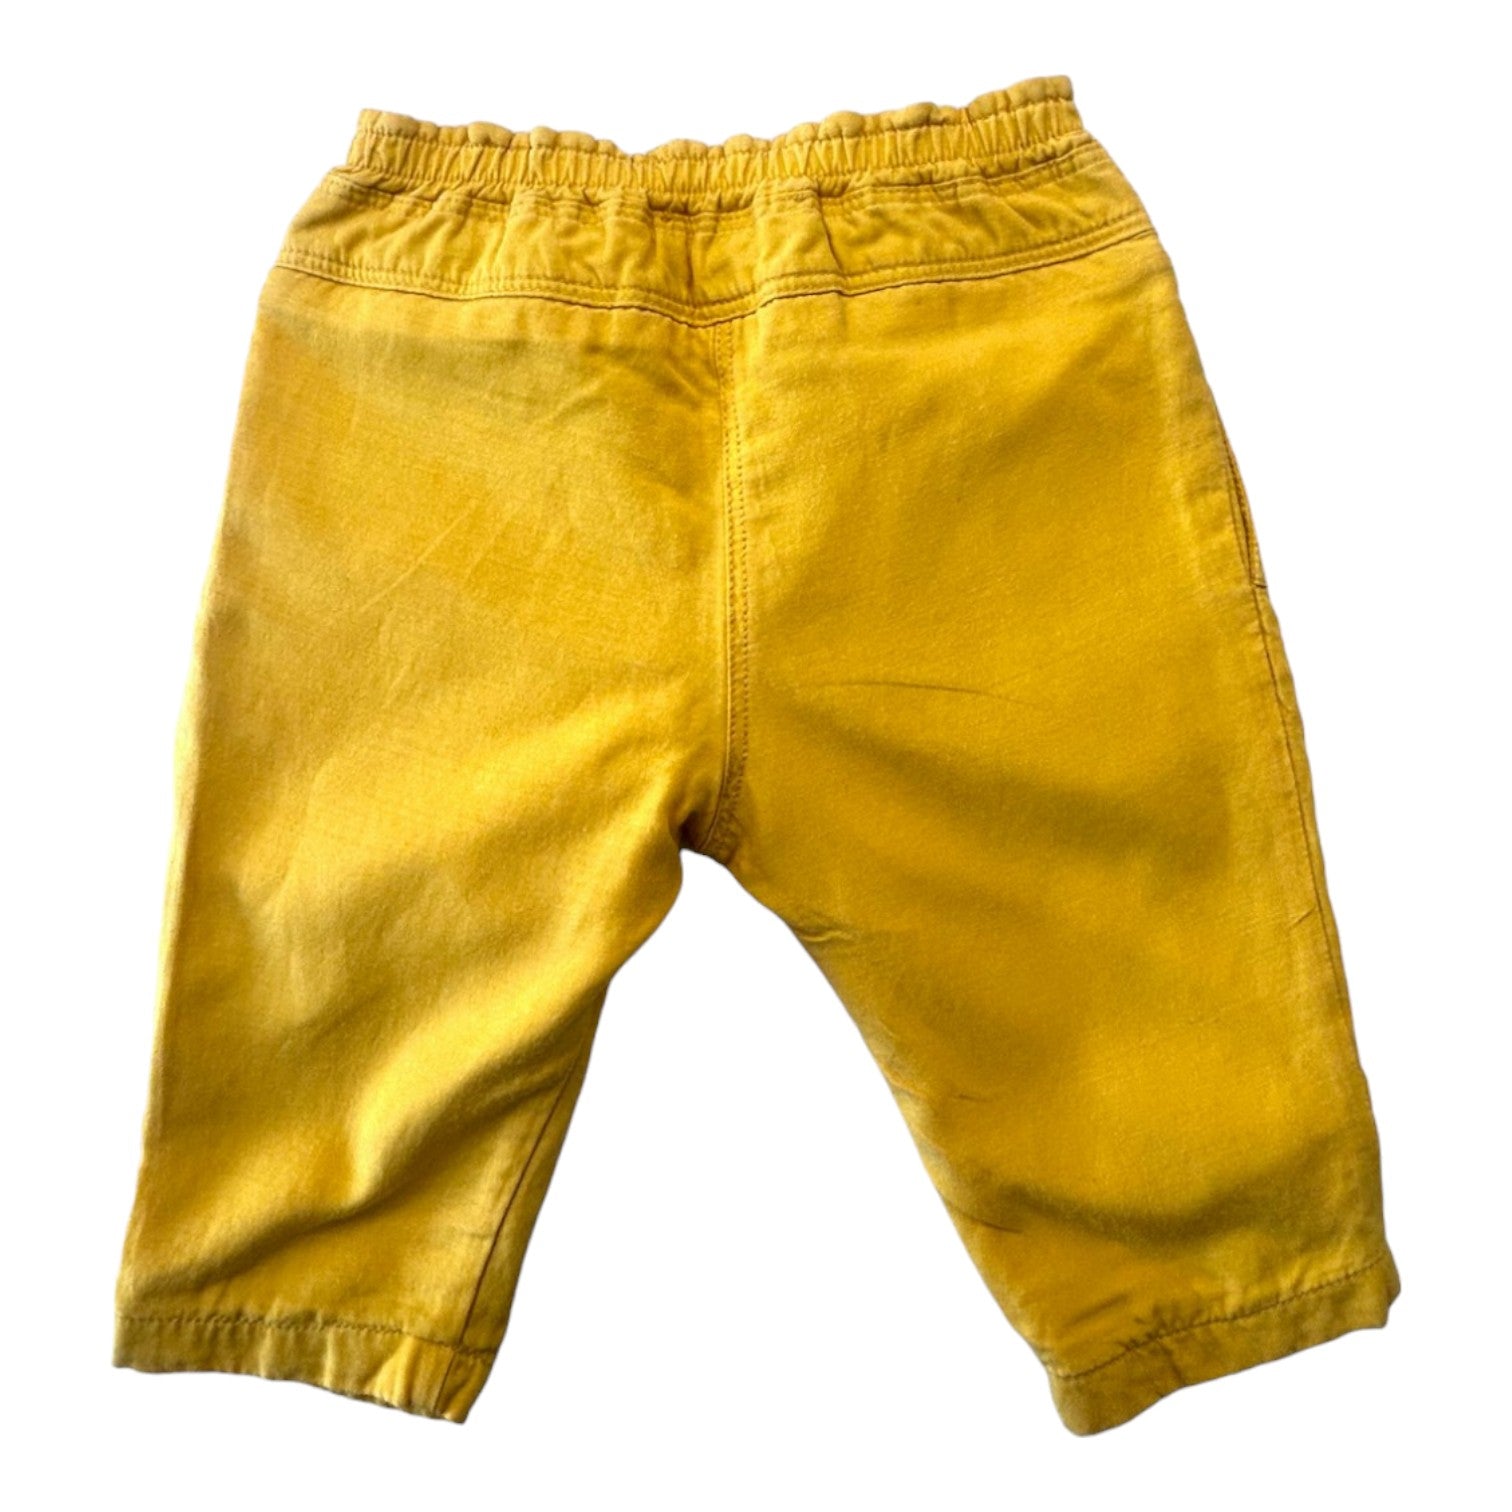 BURBERRY - Pantalon jaune - 6 mois